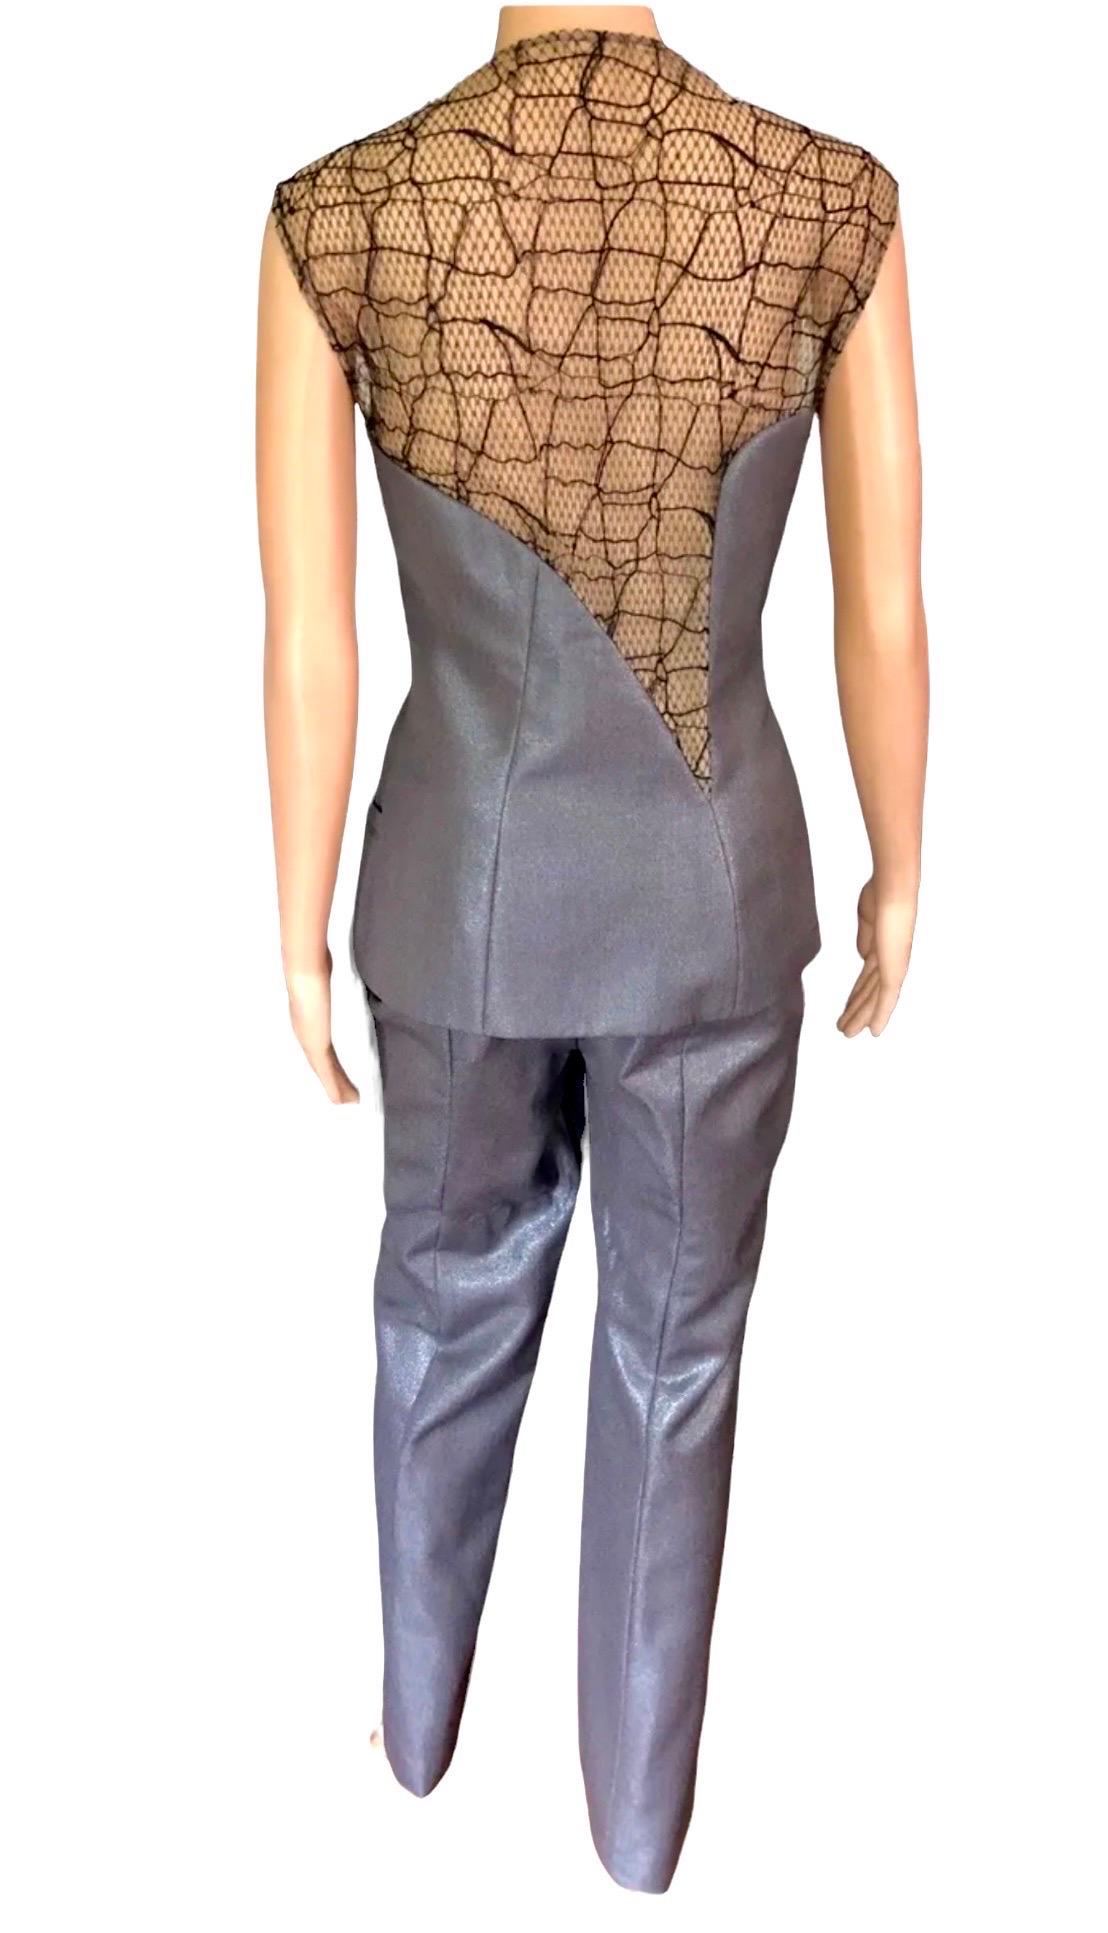 Gianni Versace S/S 1998 Runway Sheer Cutout Panels Top & Pants Suit 2 Piece Set For Sale 3